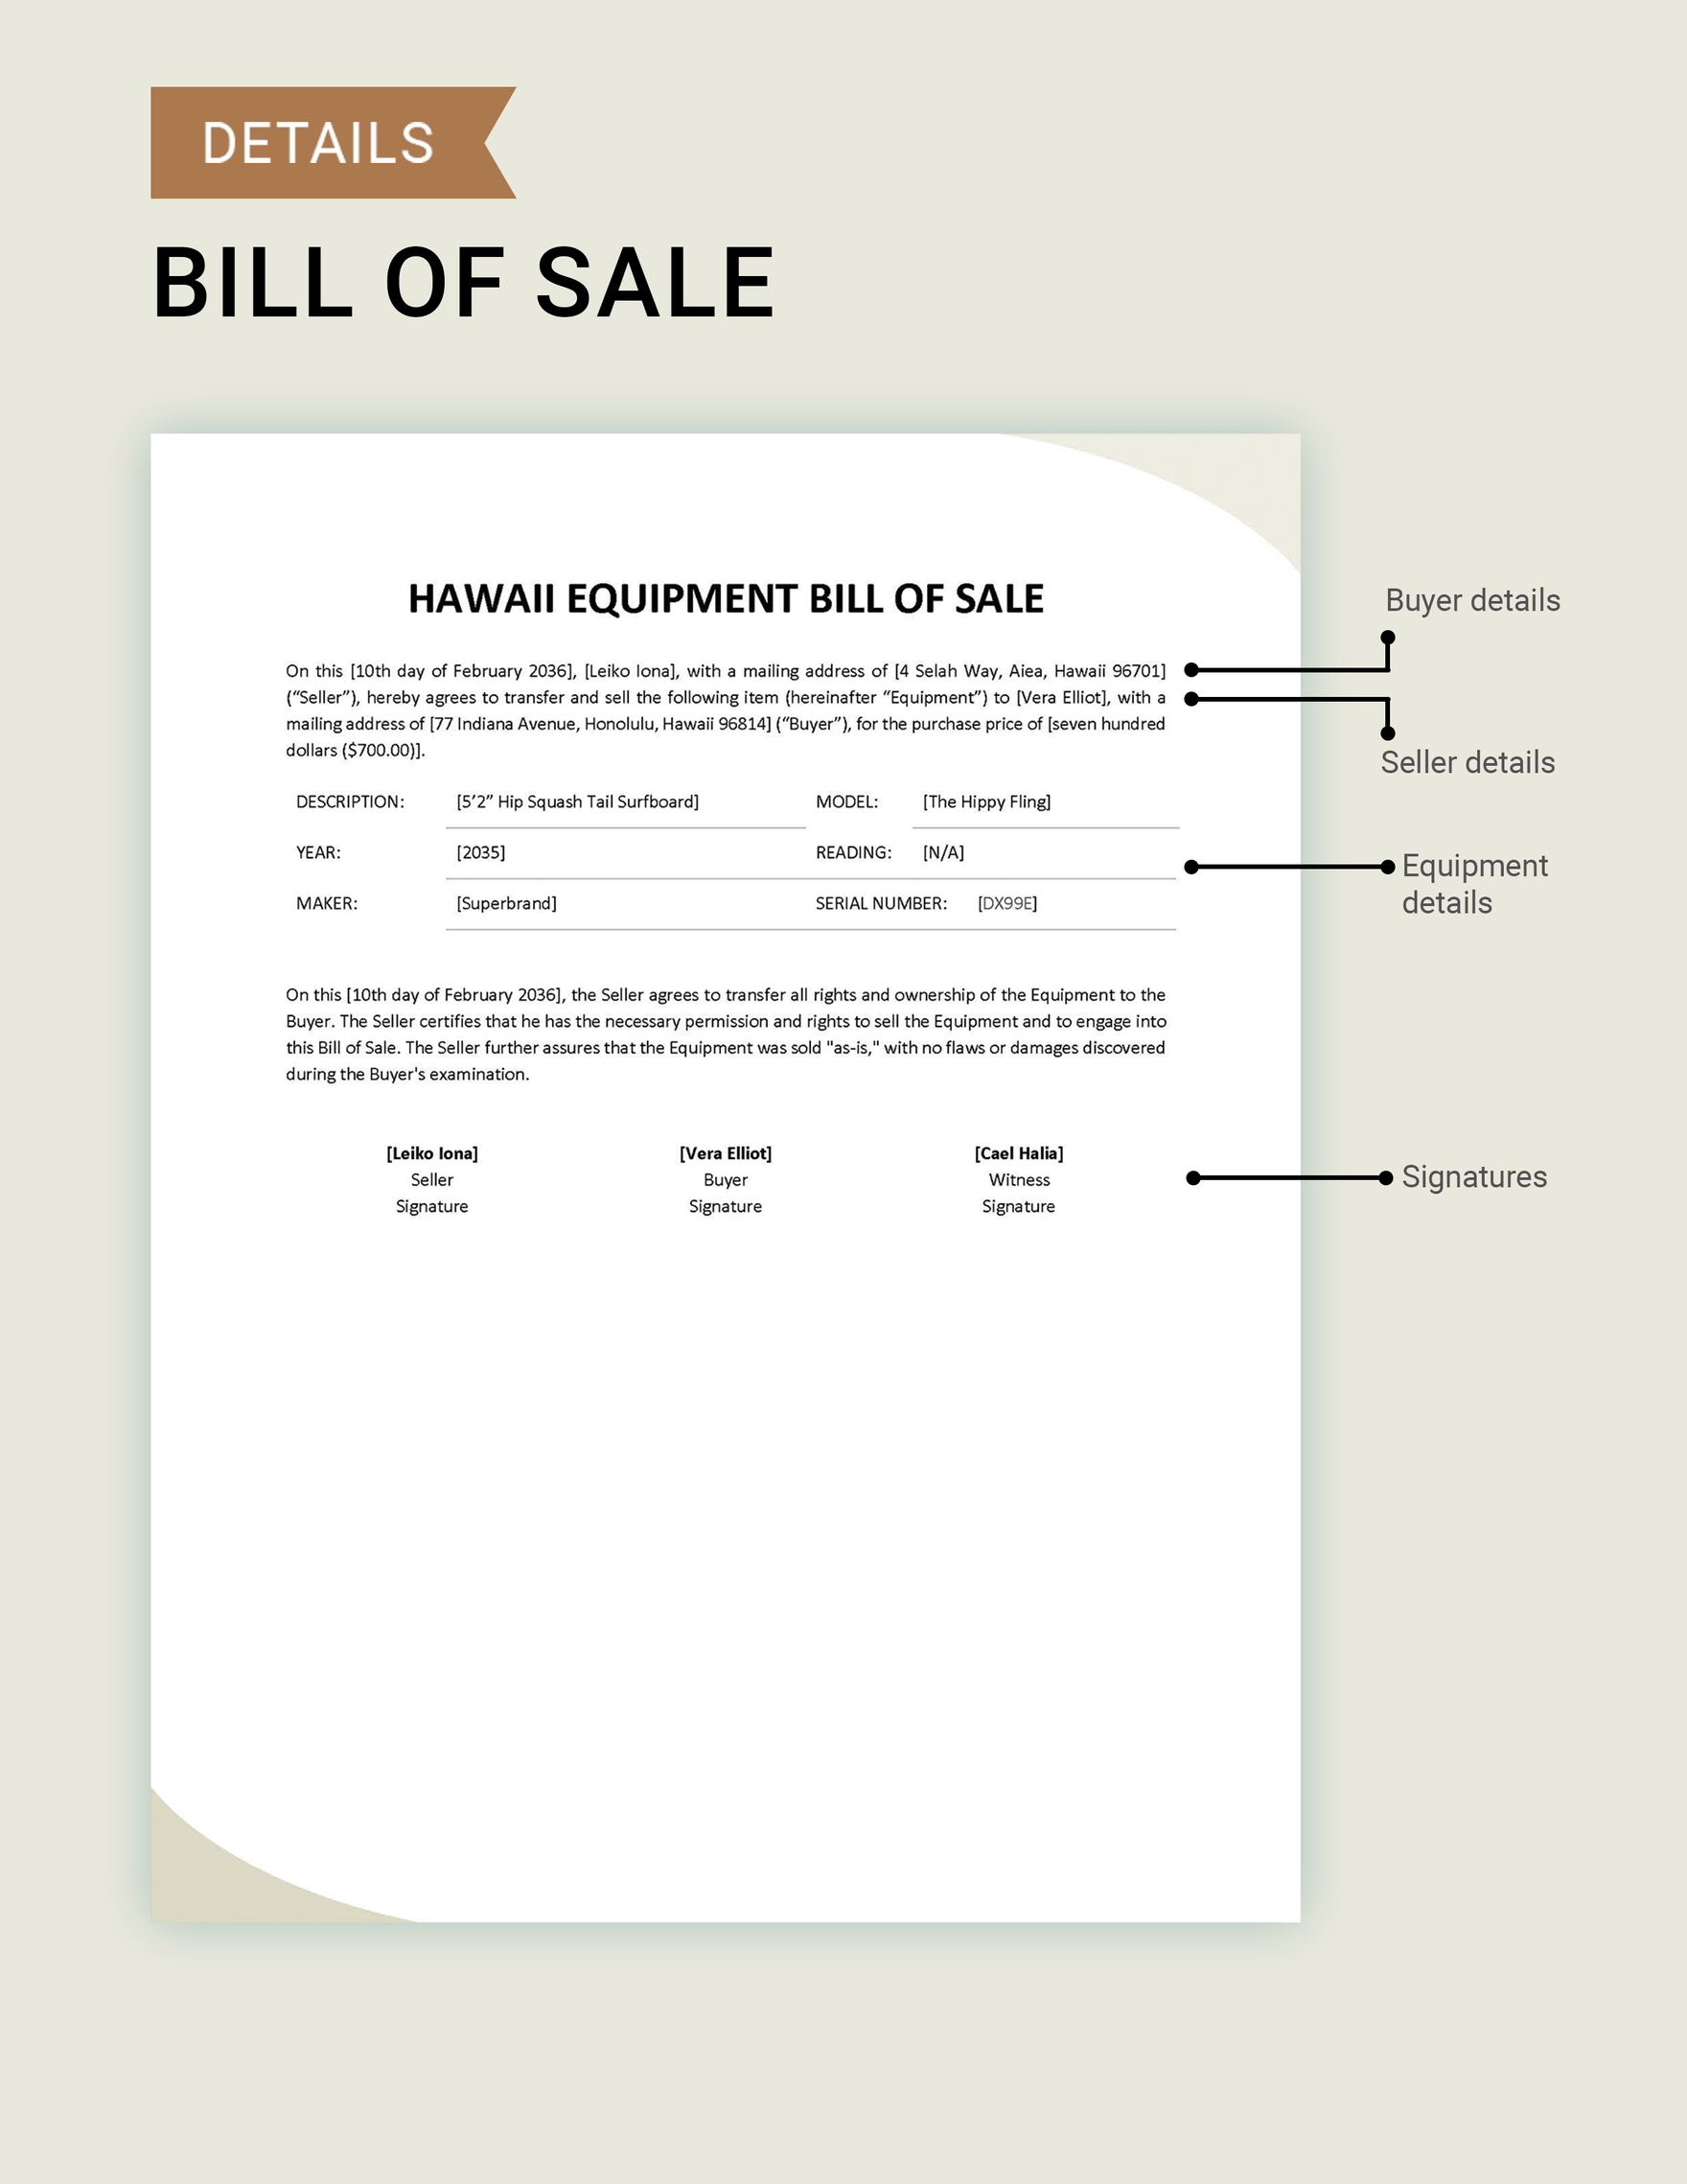 Hawaii Equipment Bill of Sale Template